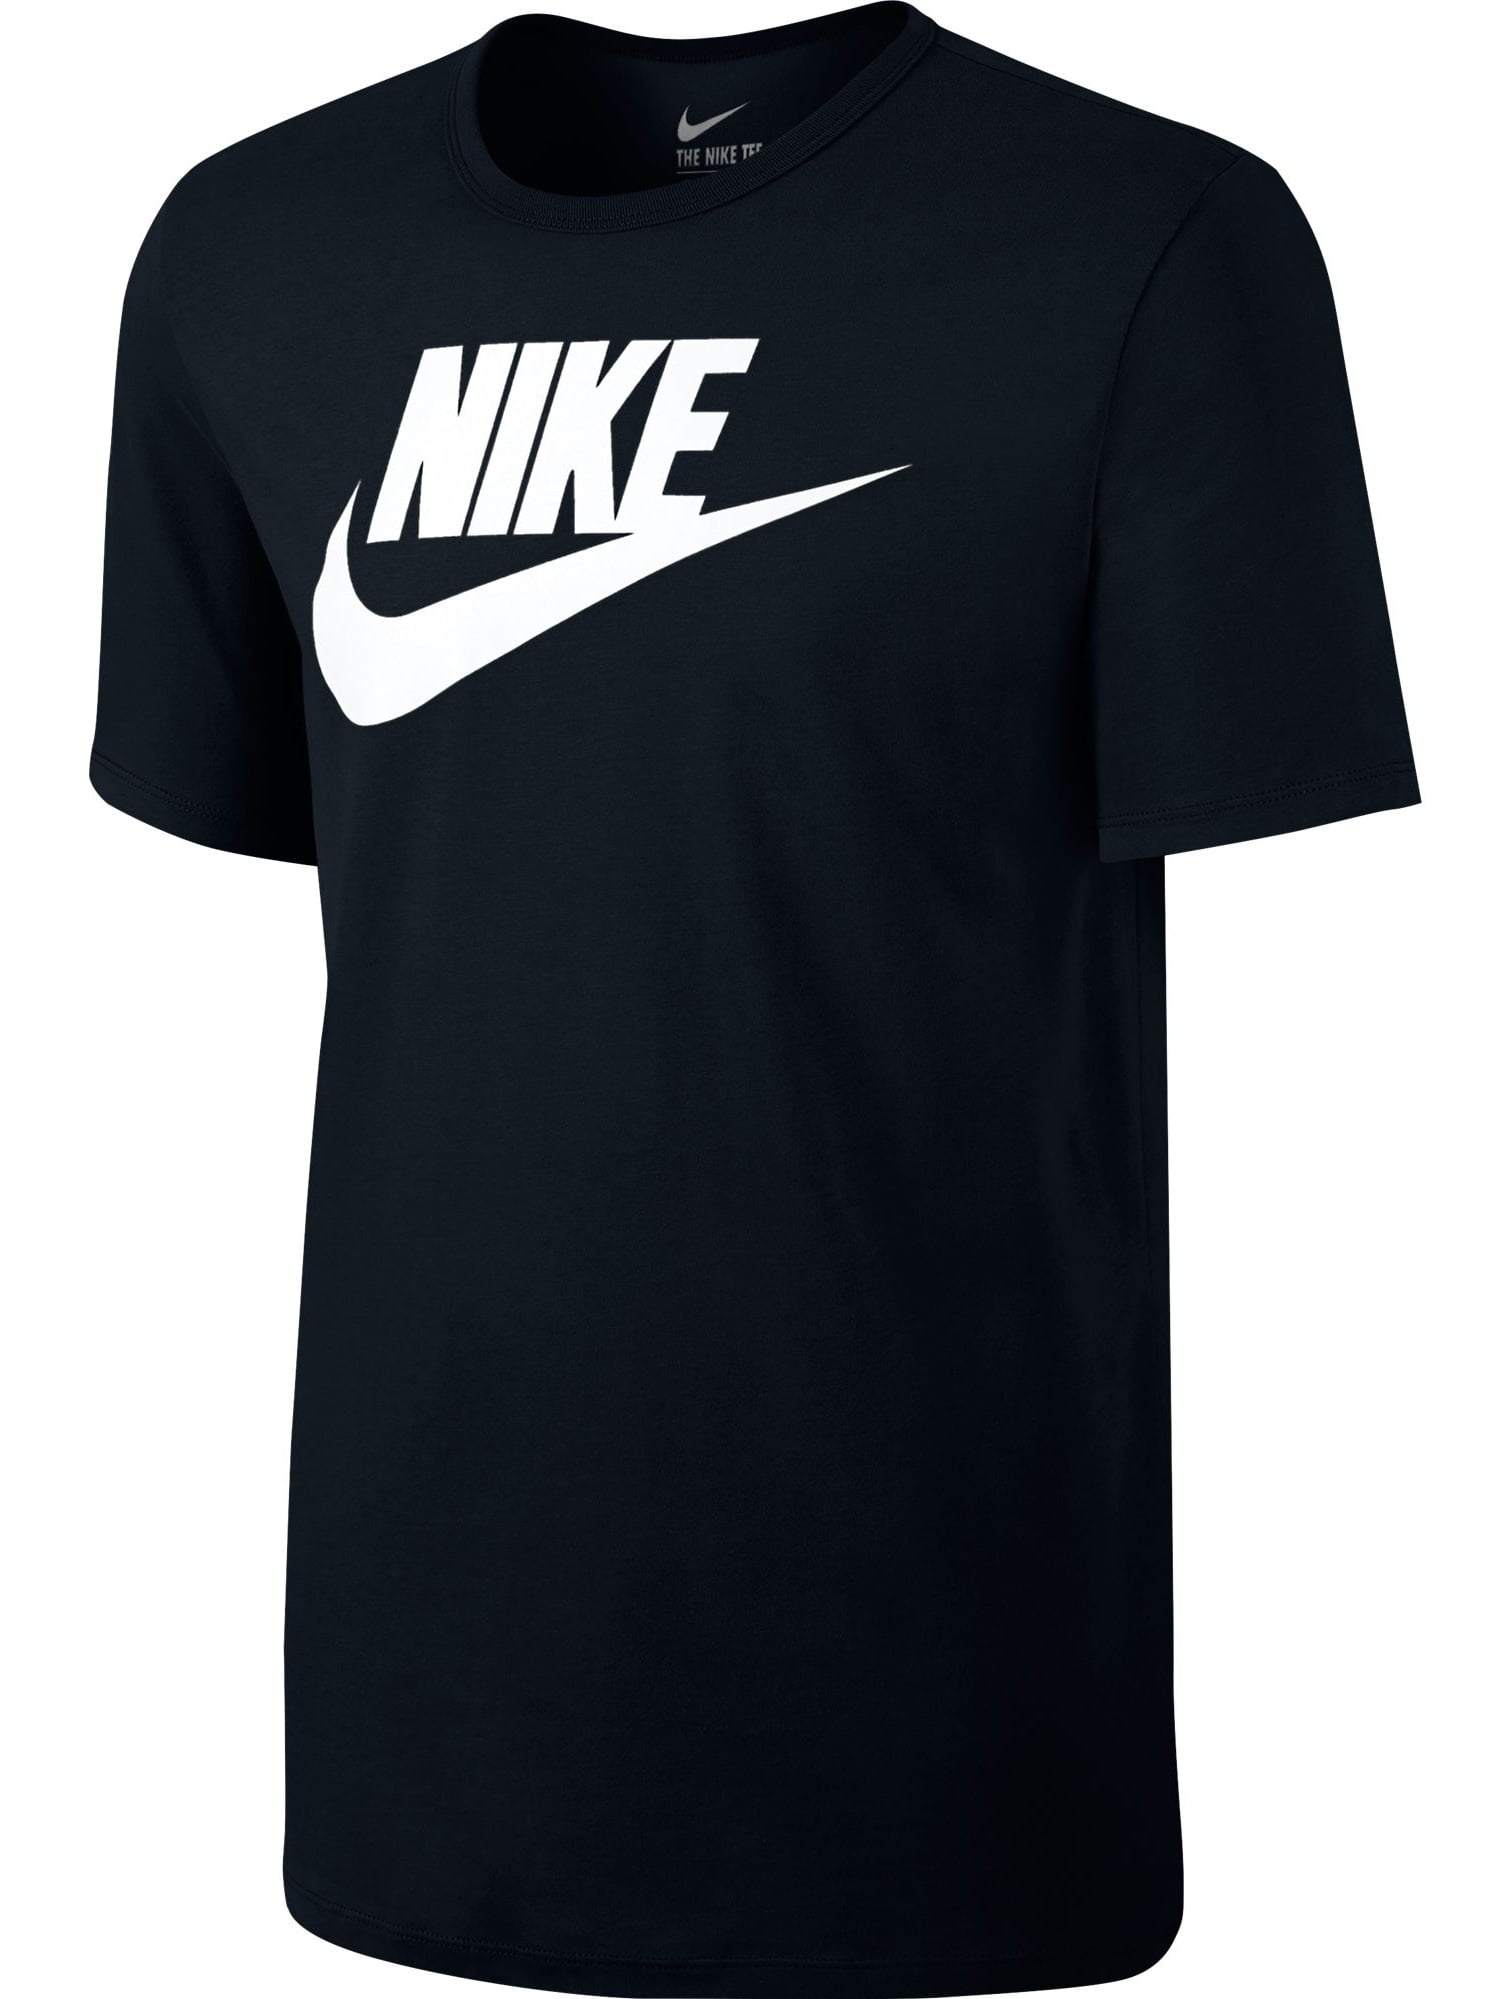 Nike - Nike Futura Icon Men's T-Shirt Black/White 696707-015 - Walmart ...